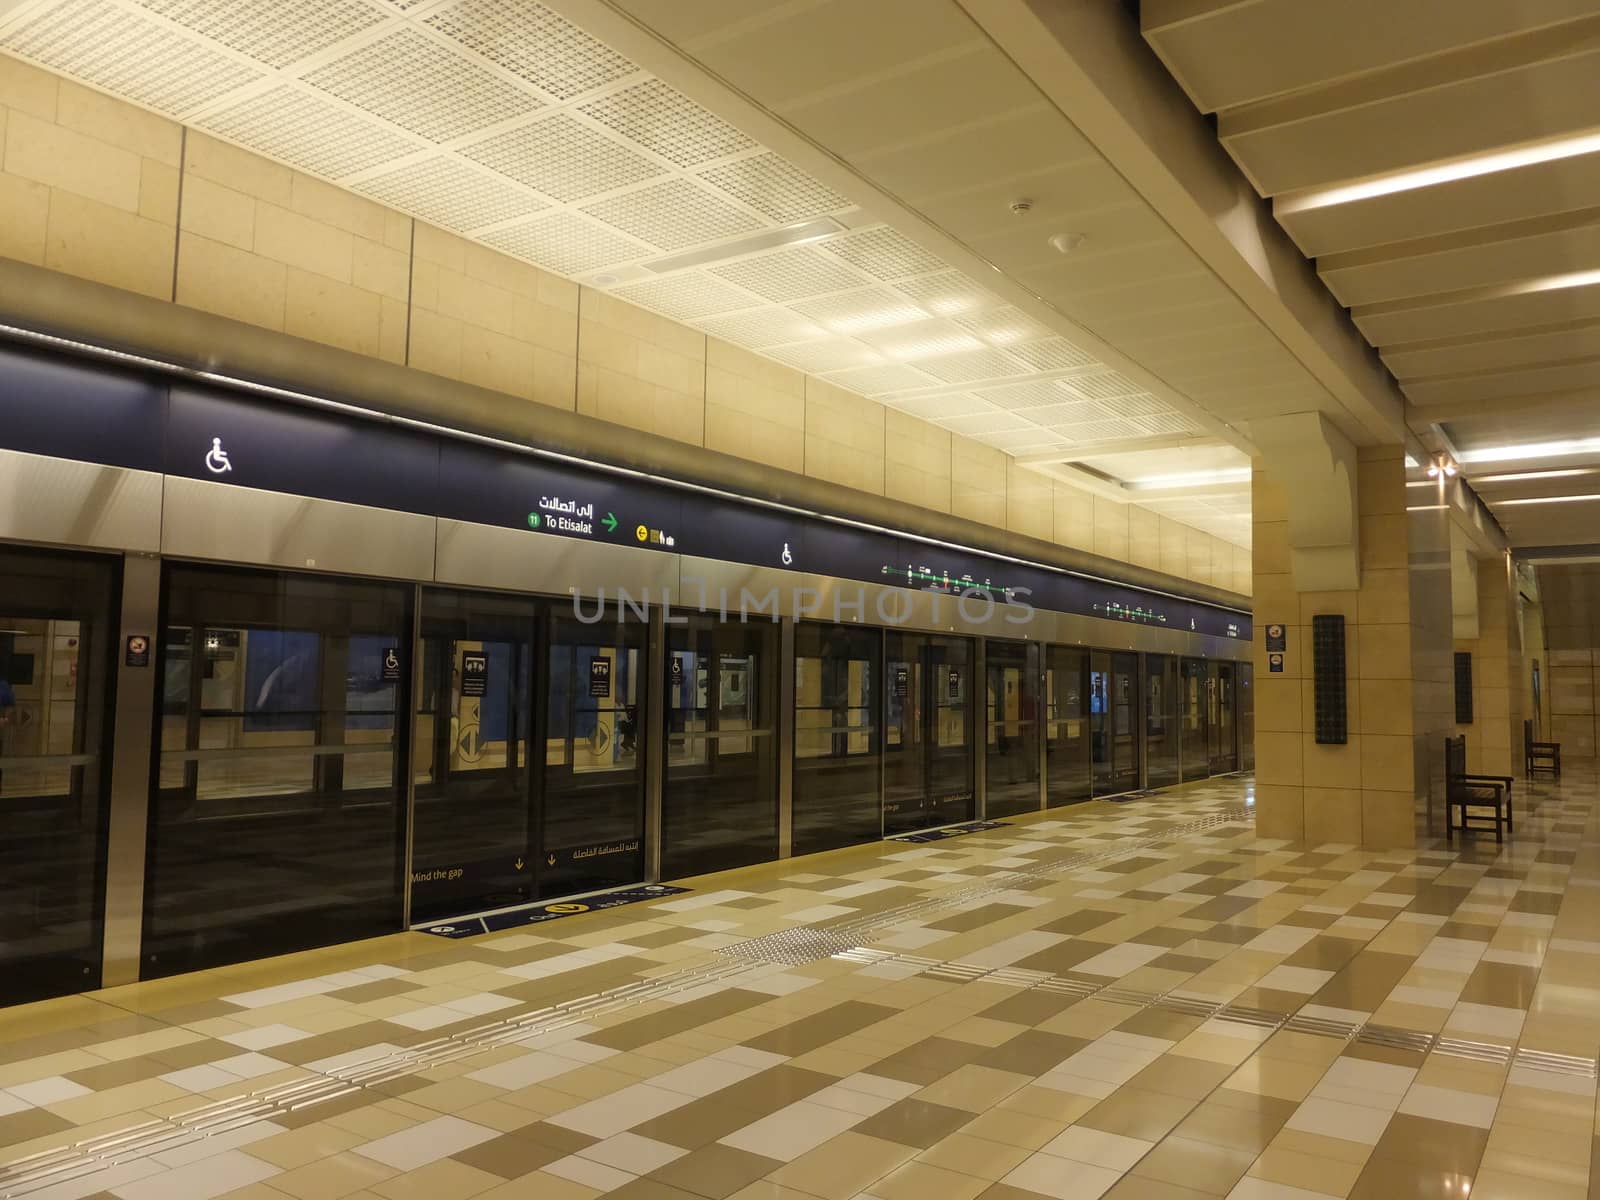 Al Ras Metro Station in Dubai, UAE by sainaniritu